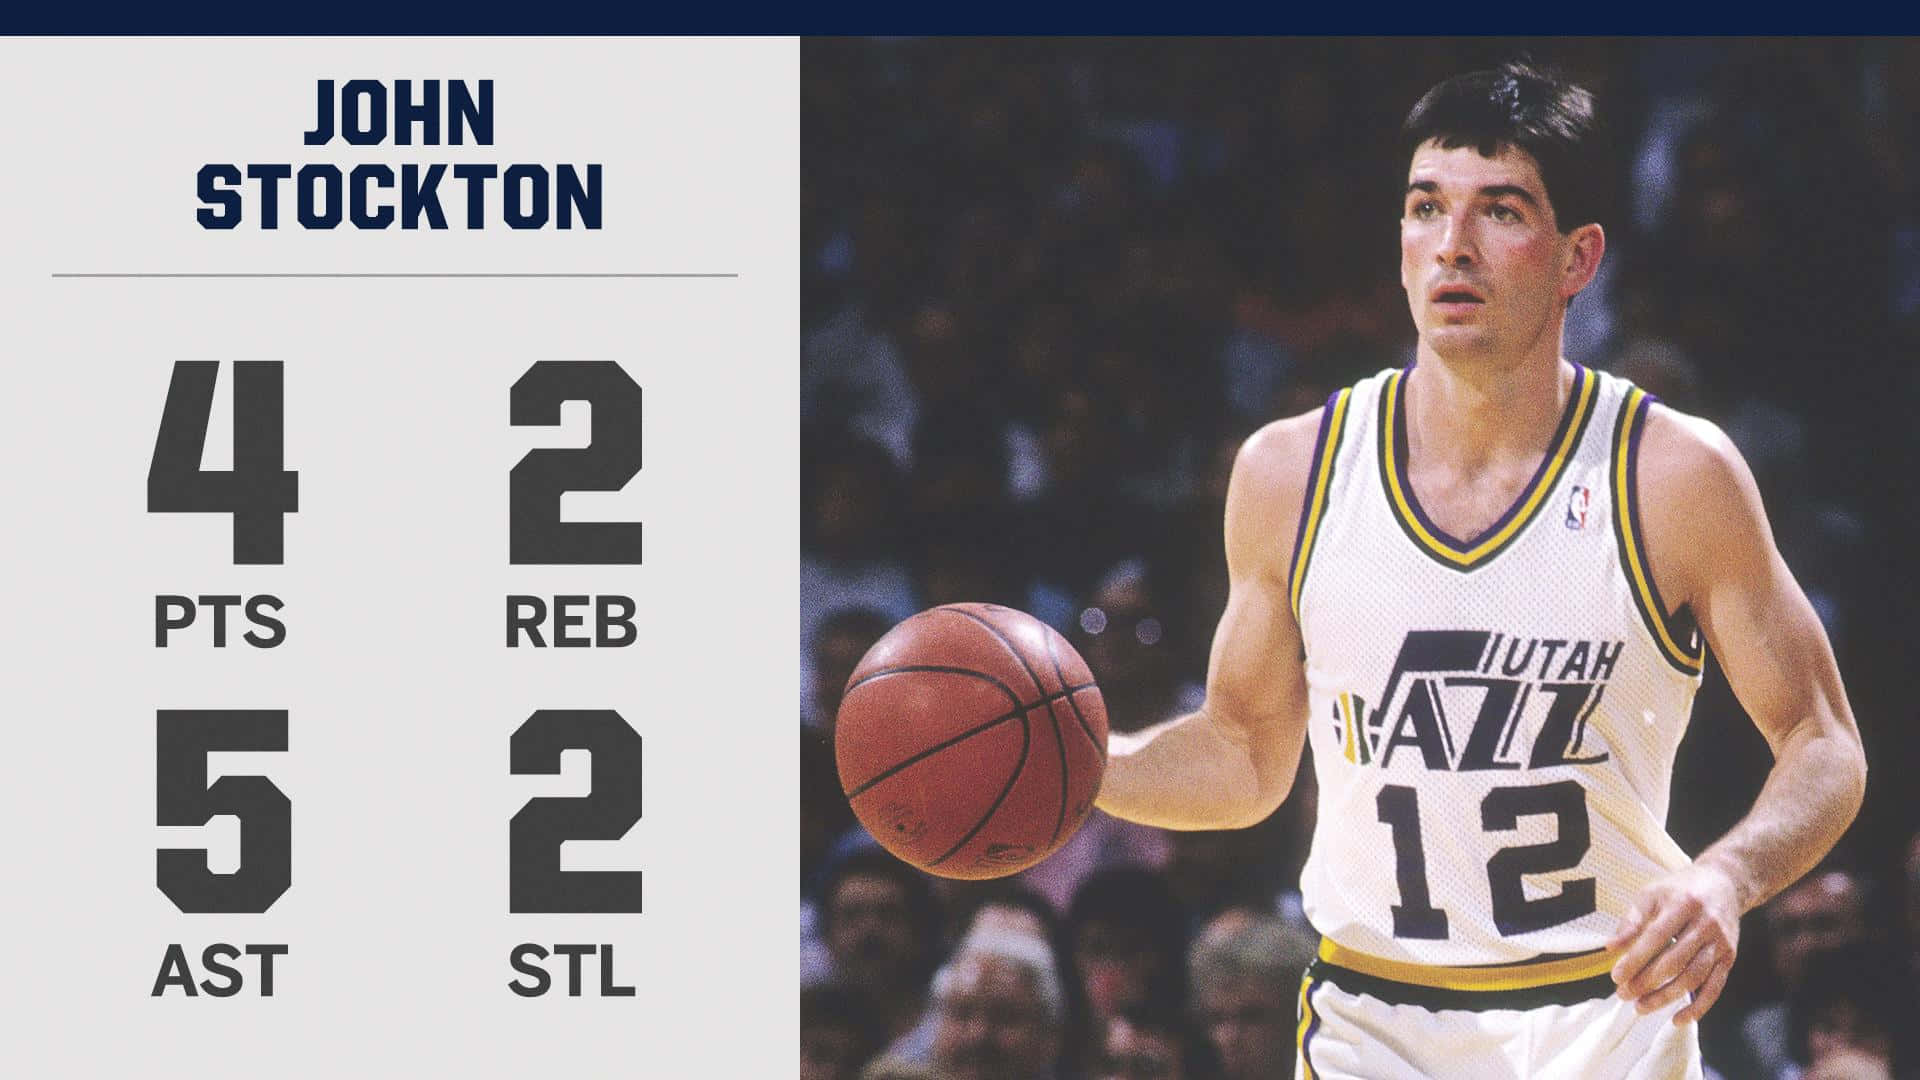 John Stockton Basketball Statistics Wallpaper